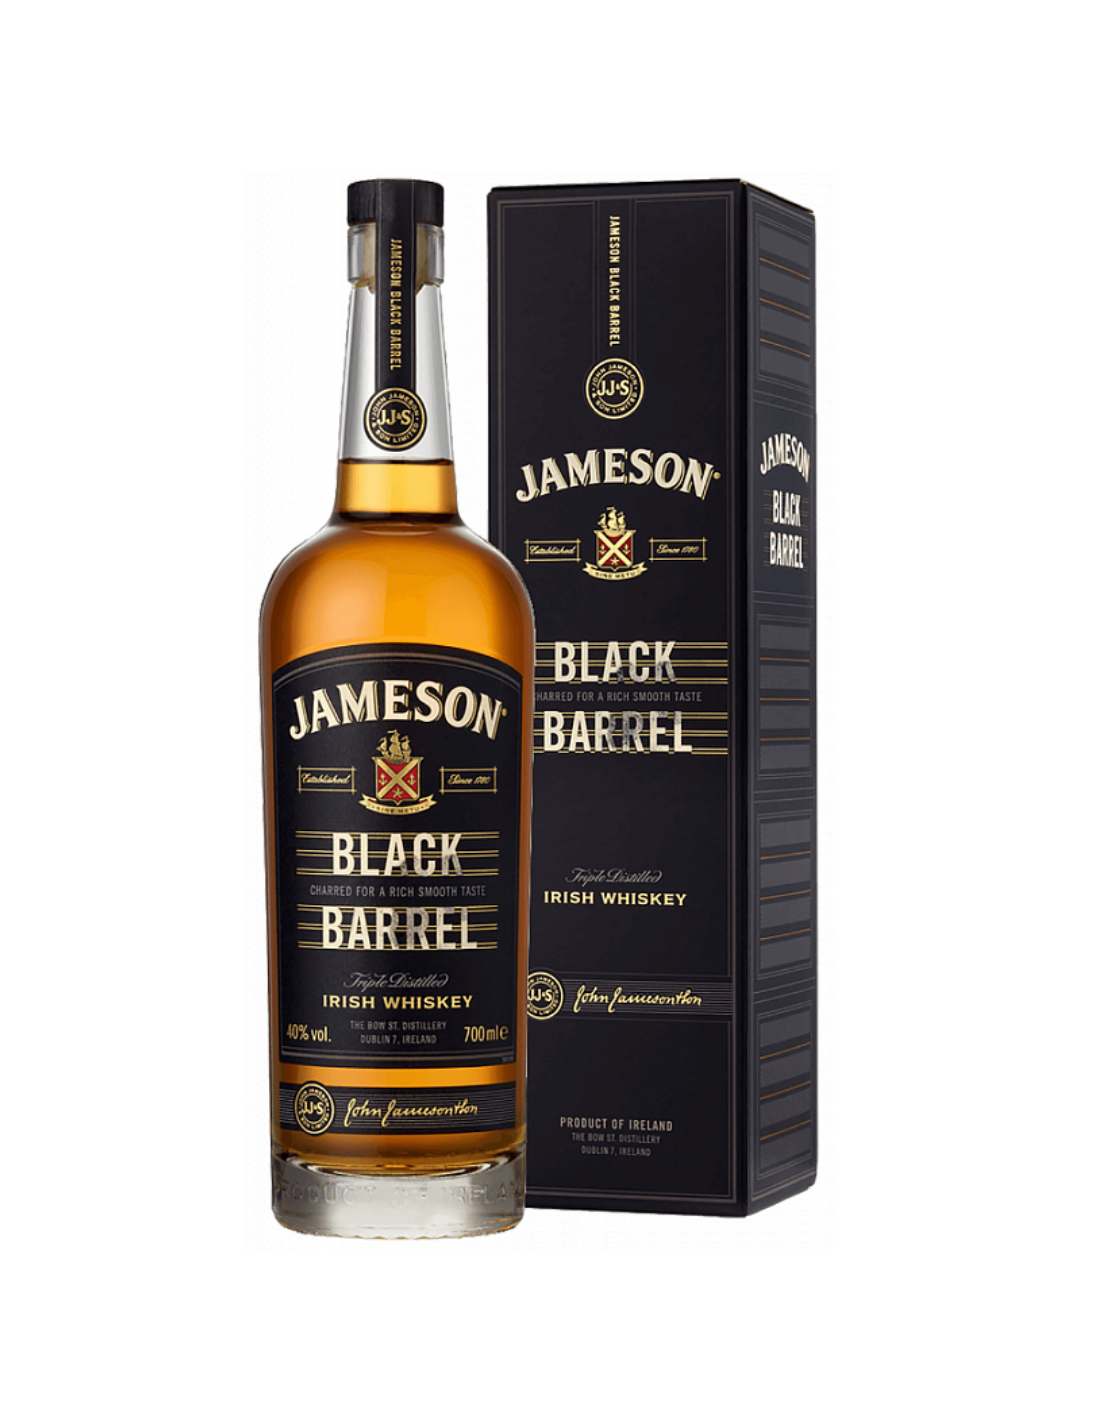 Whisky Jameson Black Barrel 0.7L, 40% alc., Irlanda alcooldiscount.ro